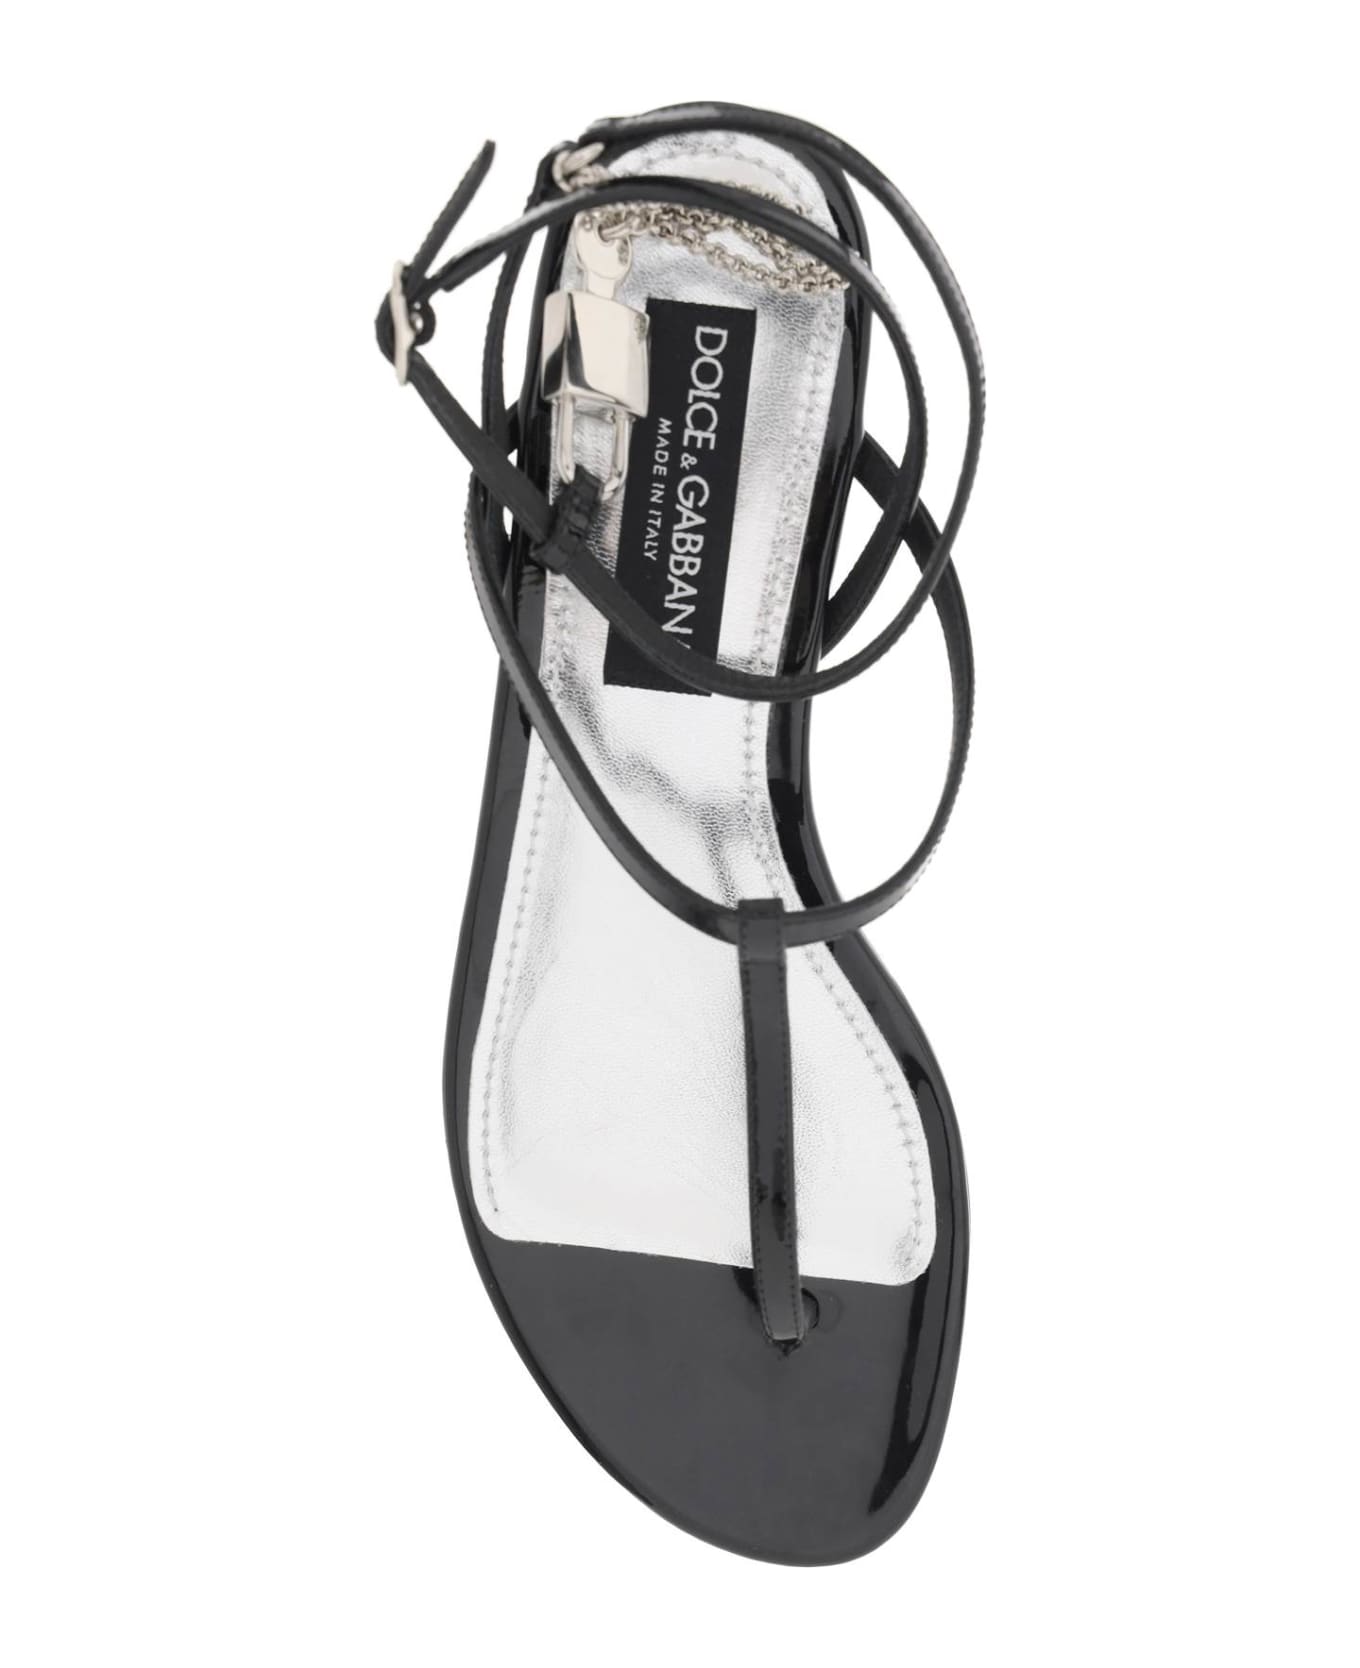 Dolce & Gabbana Patent Leather Thong Sandals With Padlock - NERO (Black) サンダル